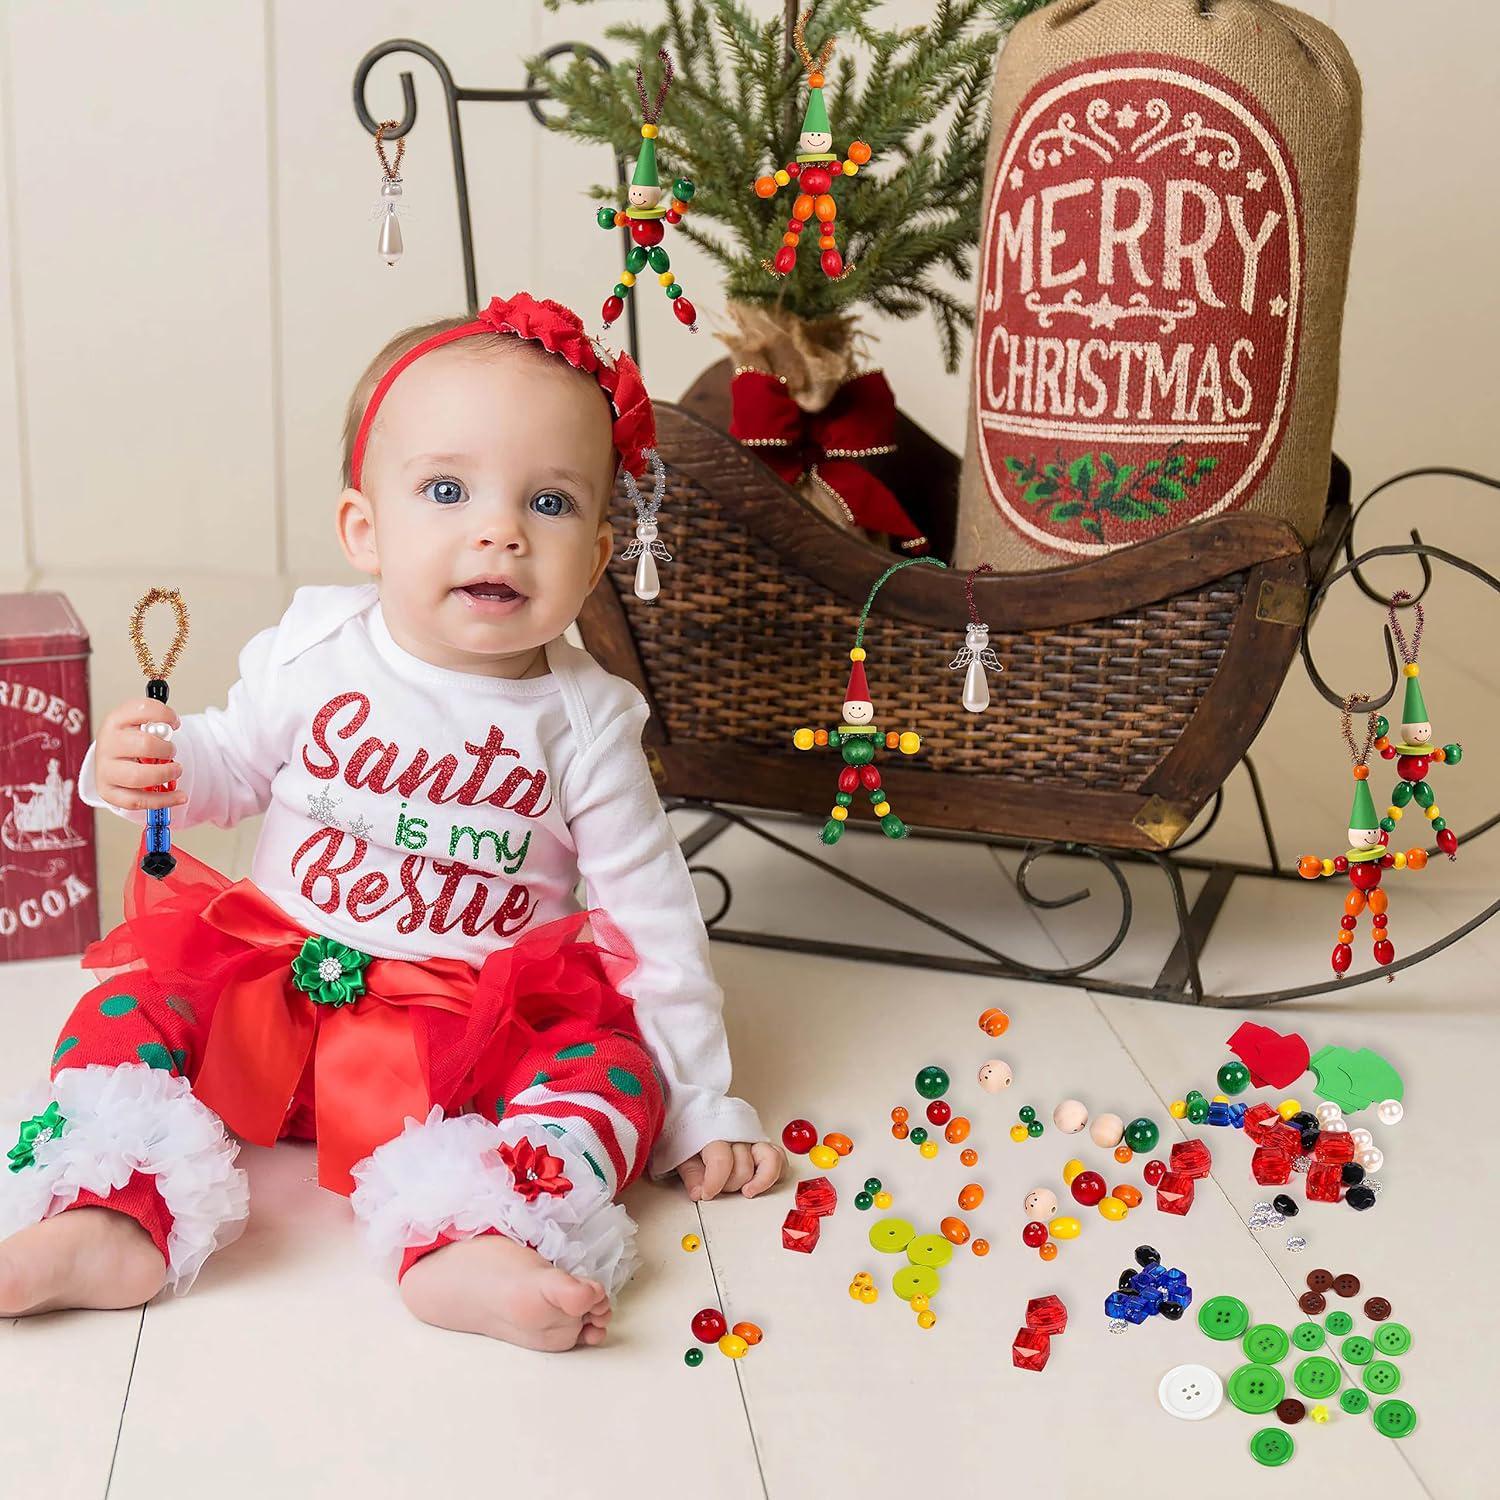 Tieshankao 16pcs Christmas Crafts for Kids - DIY Beads Ornaments Kits Include Nutcracker, Angel, Elf, Tree - Xmas Holiday Toys Gifts Stocking